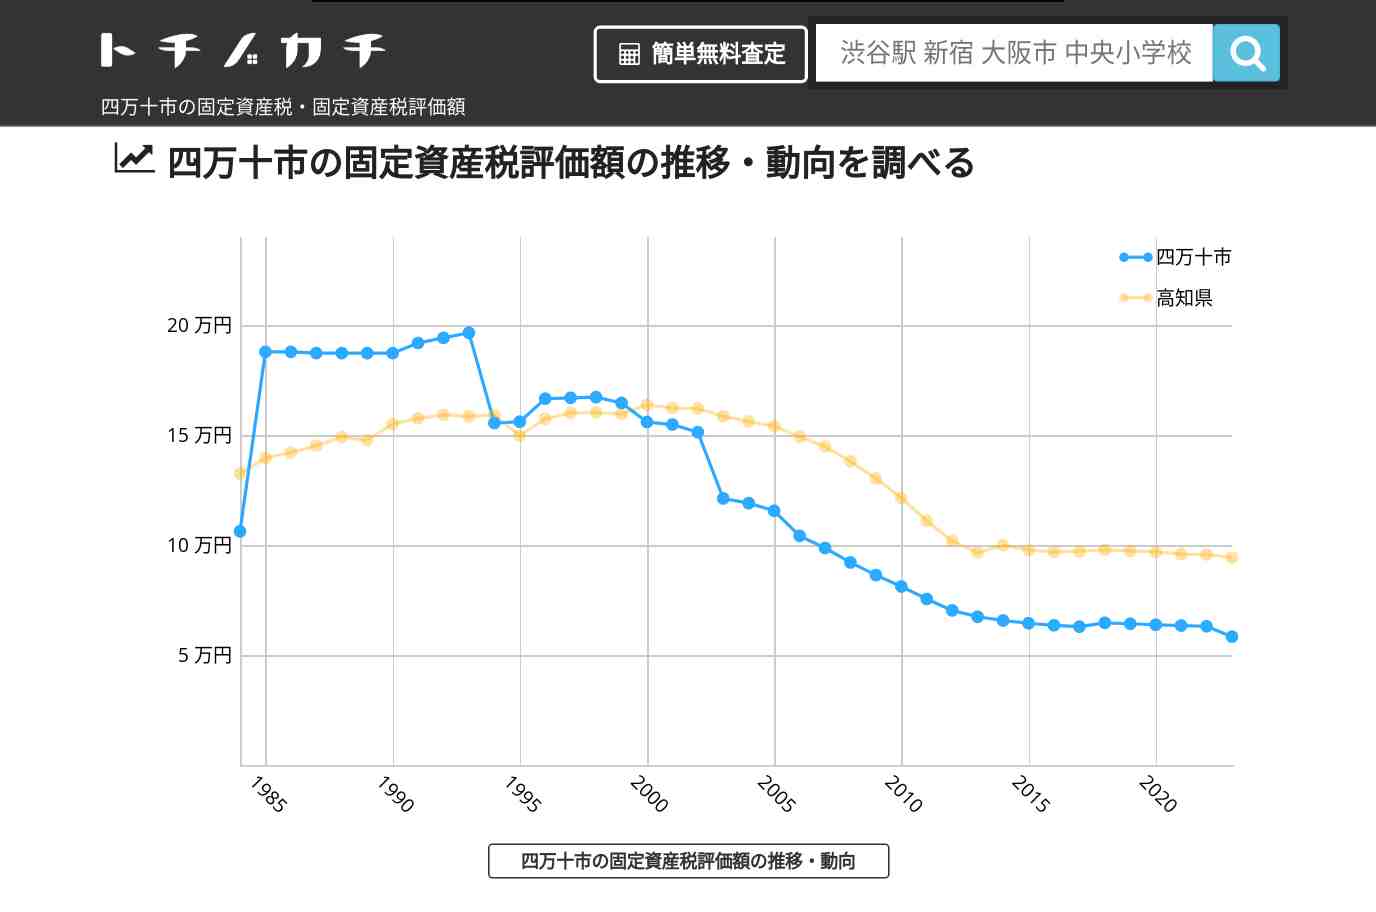 中村小学校(高知県 四万十市)周辺の固定資産税・固定資産税評価額 | トチノカチ